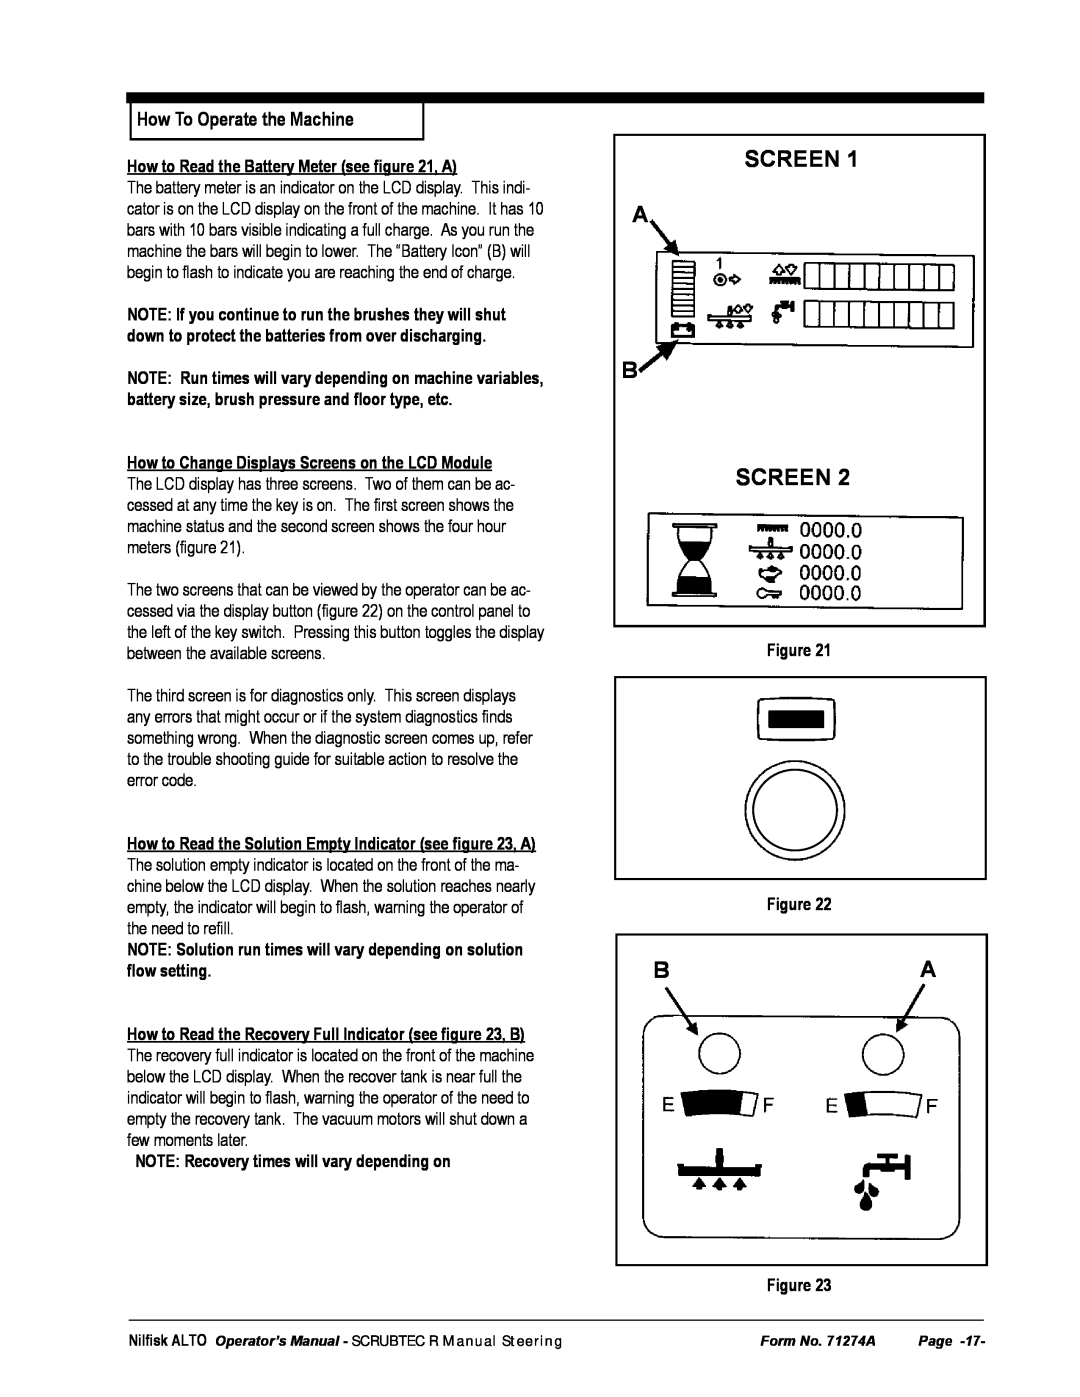 Nilfisk-ALTO 571, 586 manual Screen A B Screen, How To Operate the Machine 